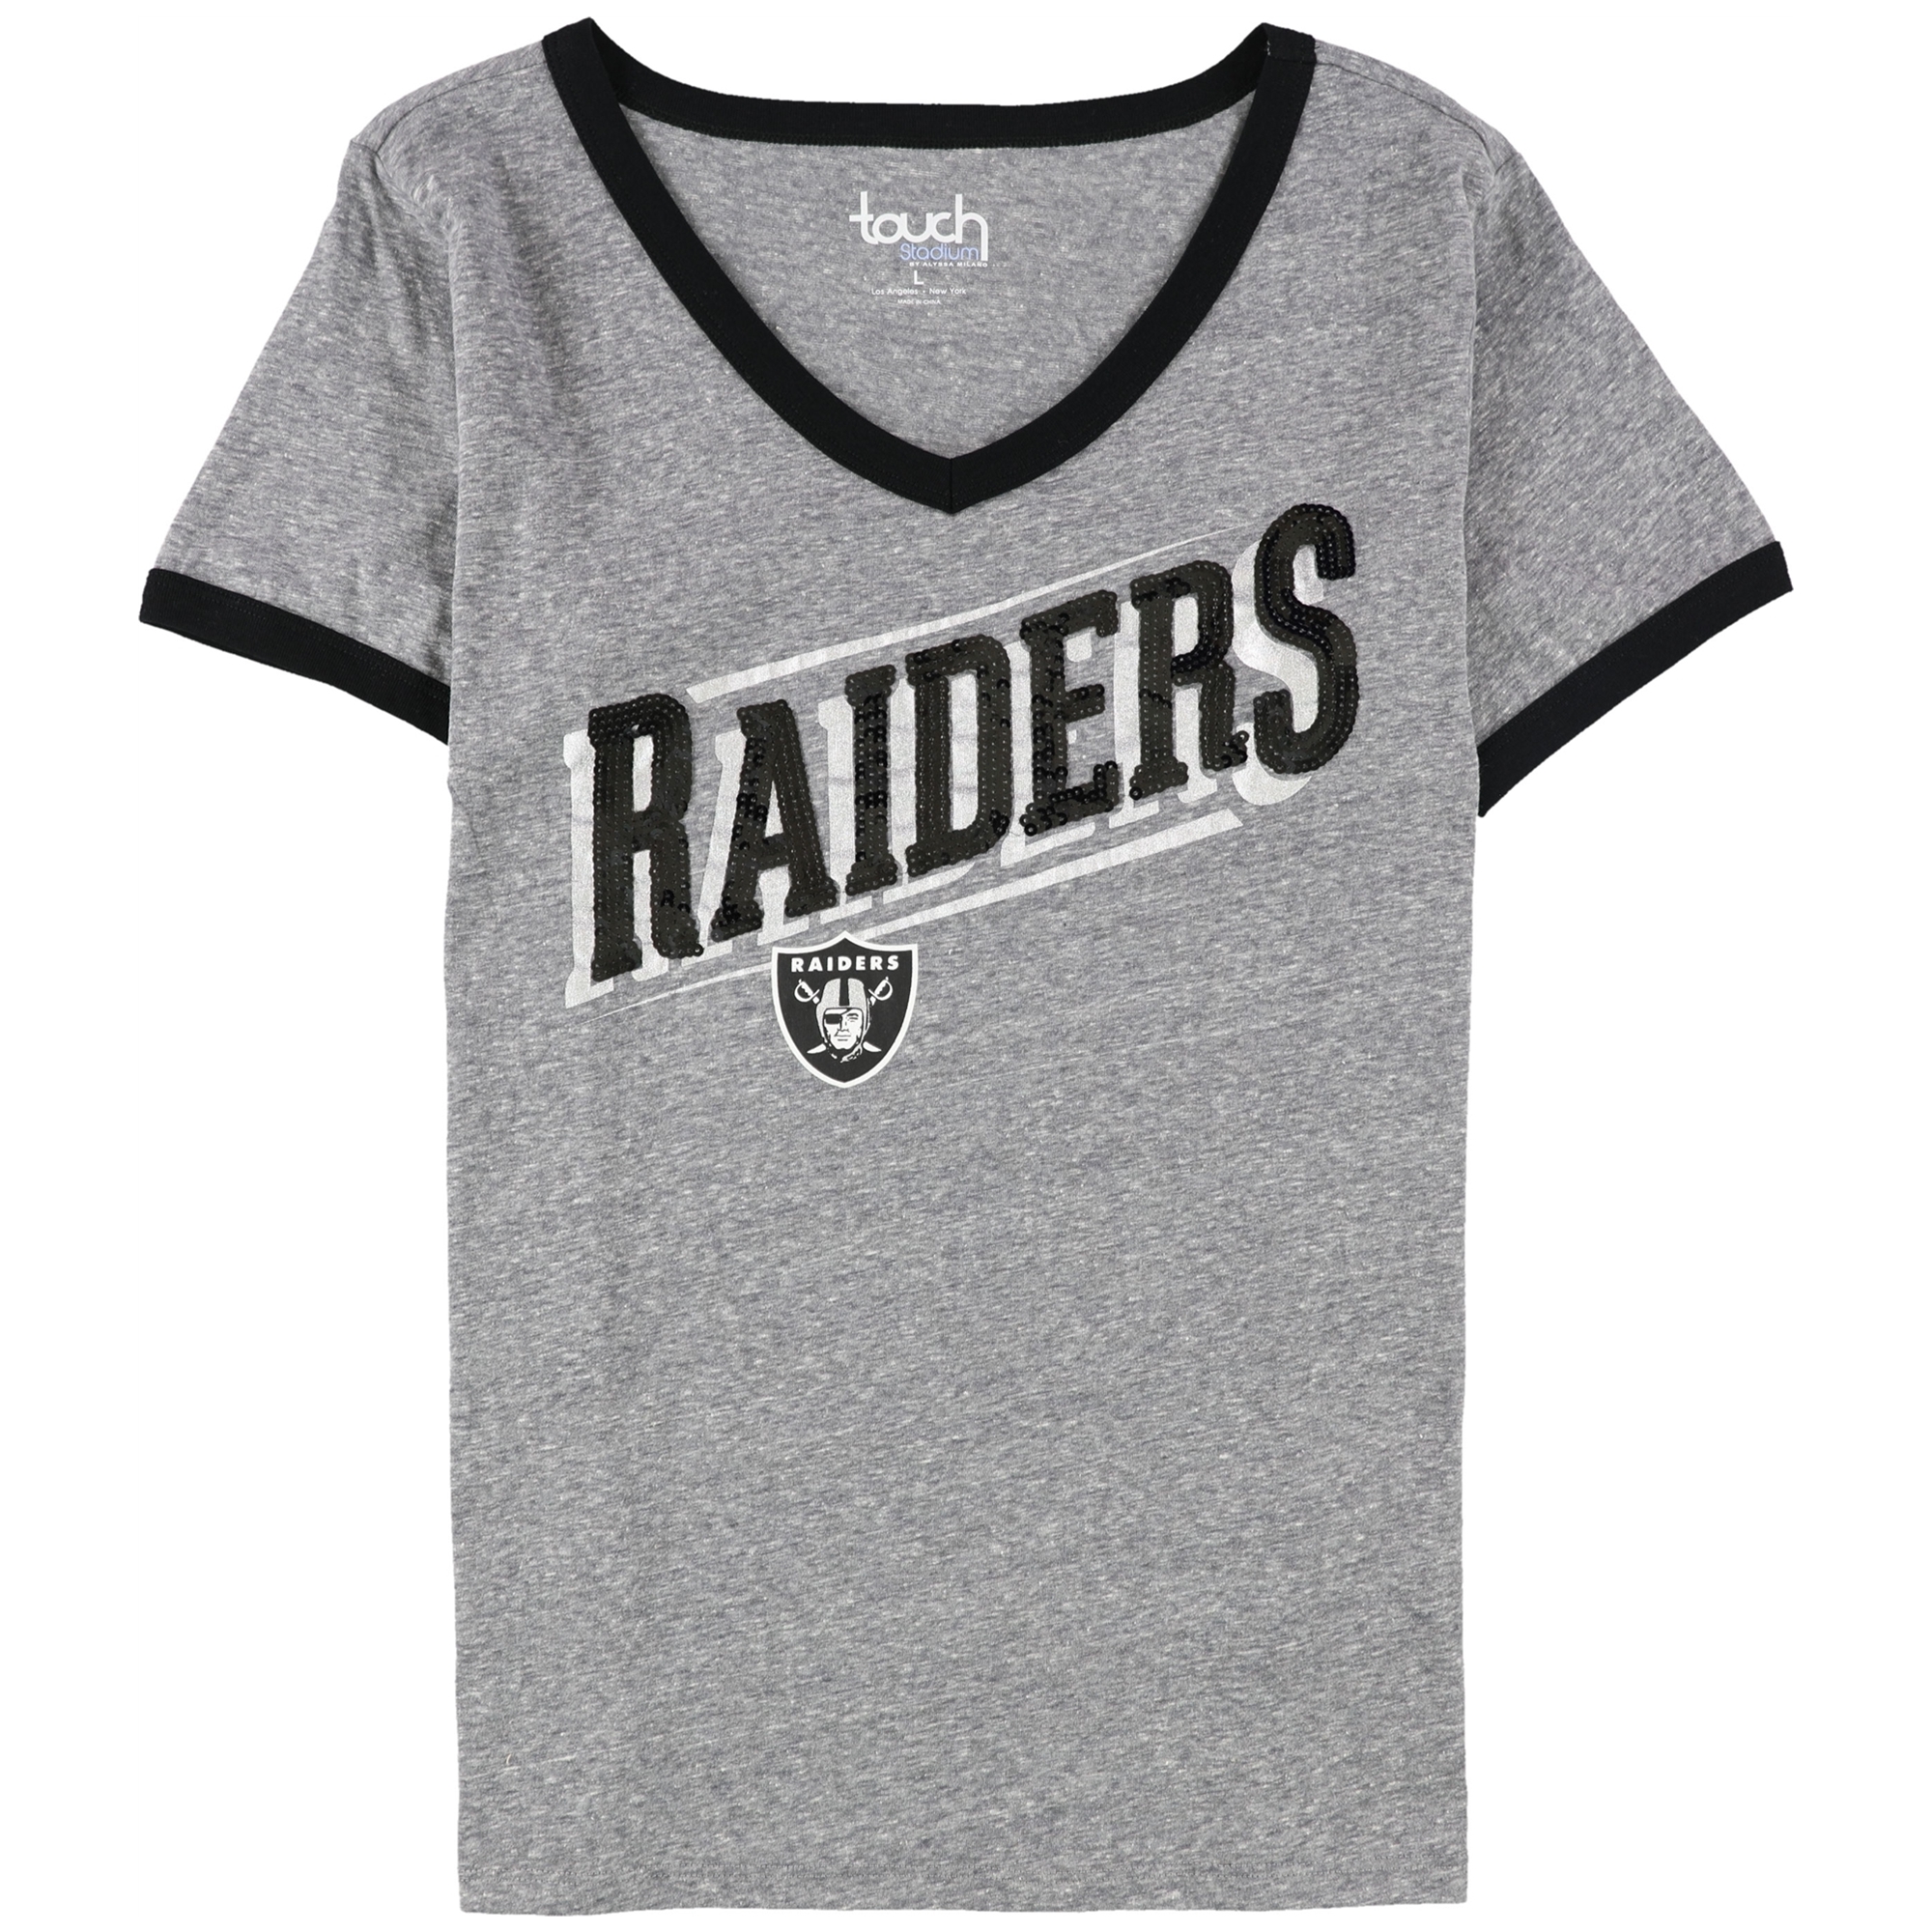 Las Vegas Raiders NFL Womens Team Dazzle Jersey, Black (Medium)